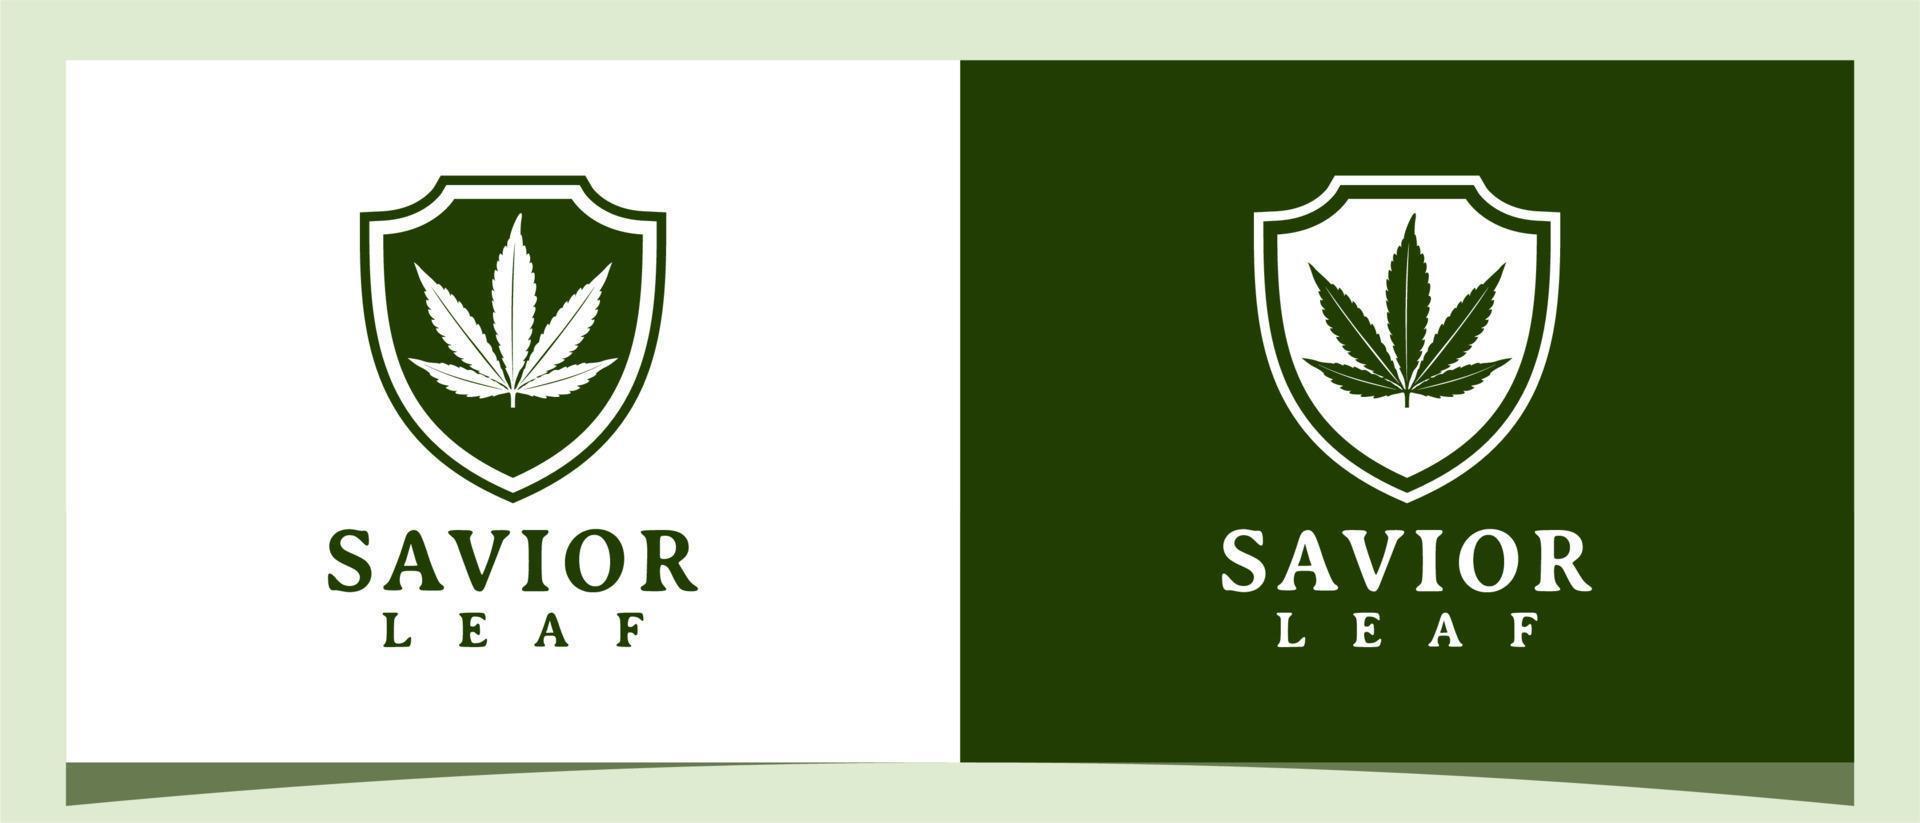 Cannabis Marijuana Leaf with Shield Logo design inspiration vector